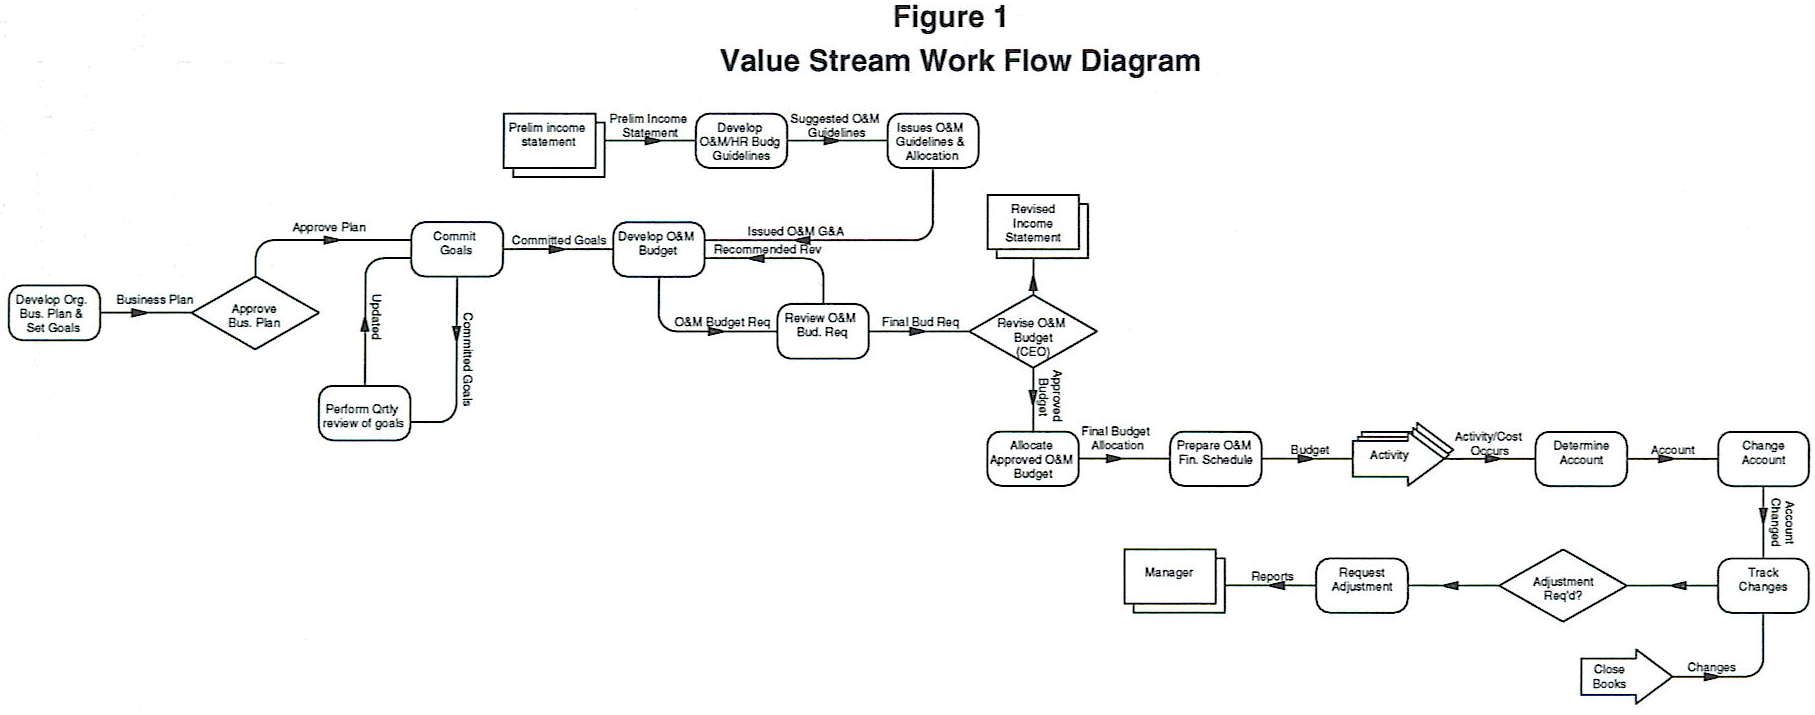 Value Stream Workflow Diagram